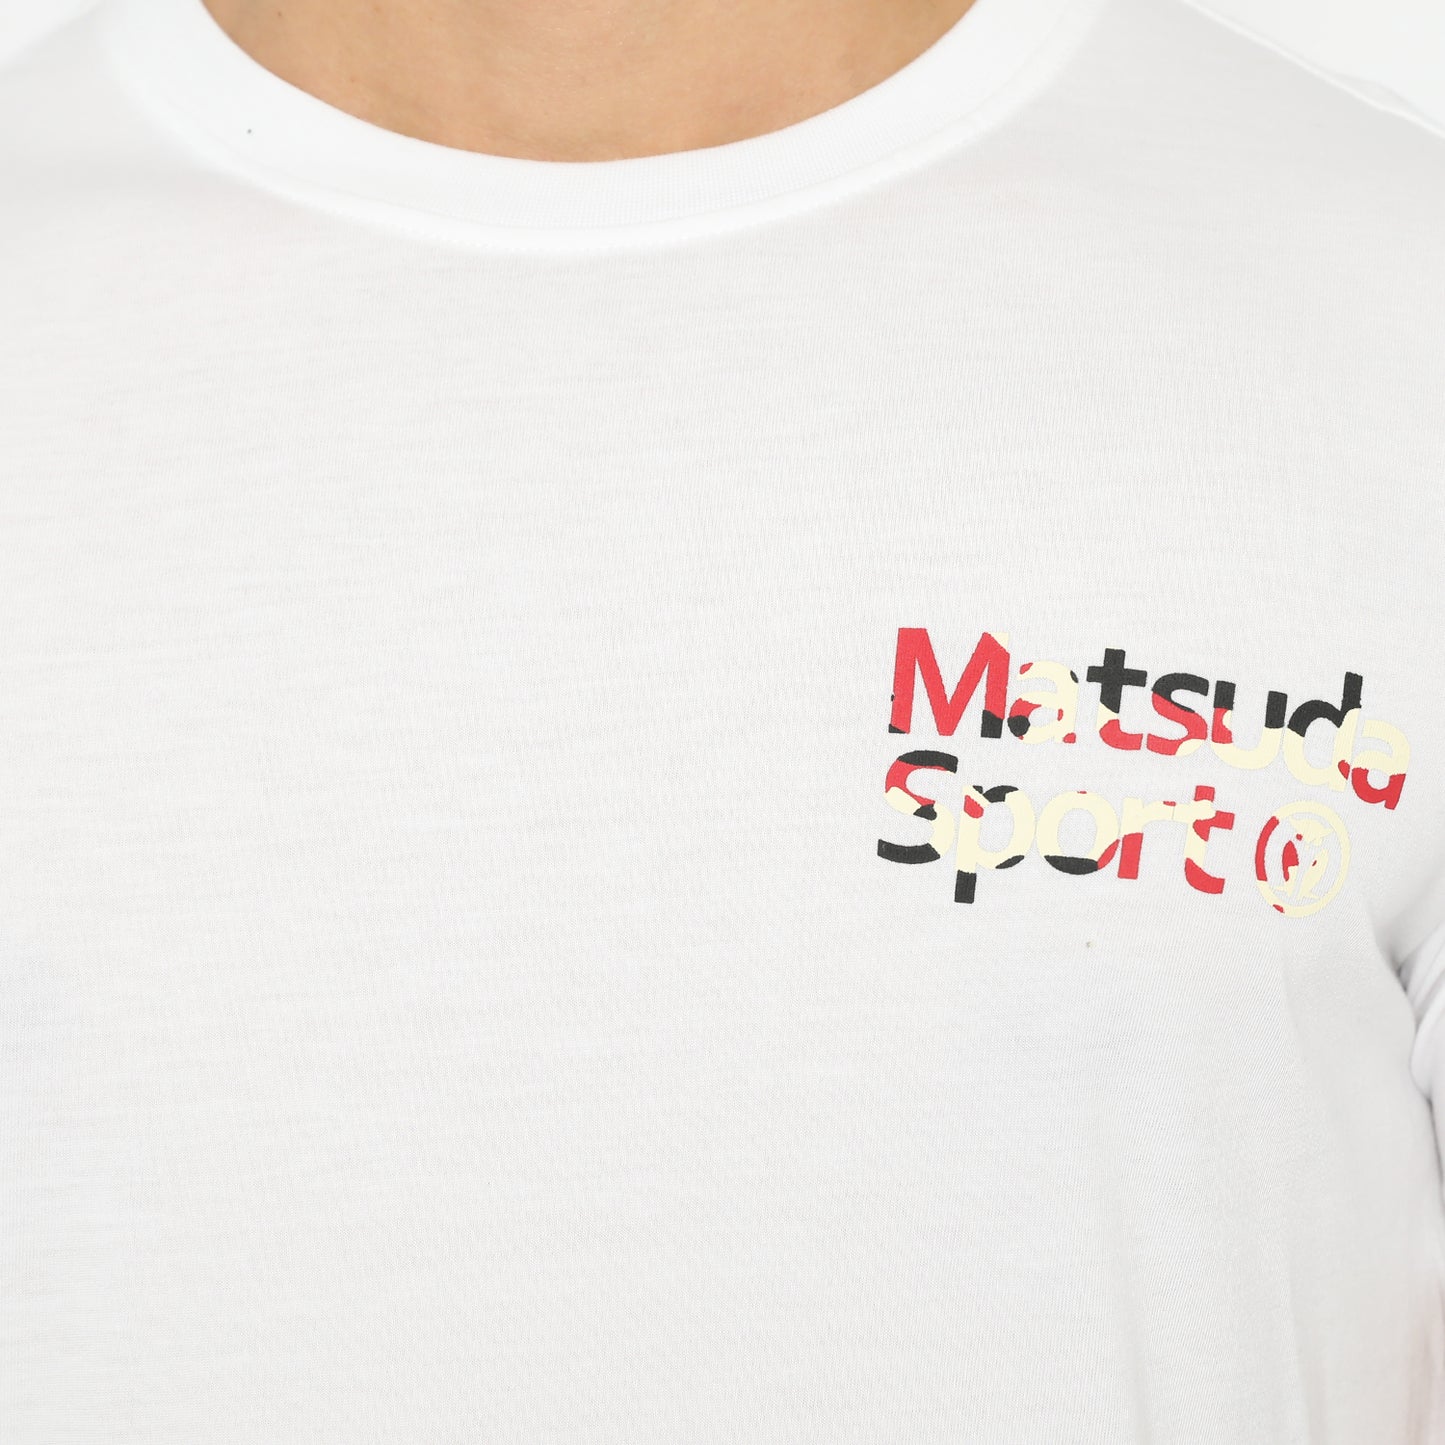 MATSUDA Kaos T shirt Ayase